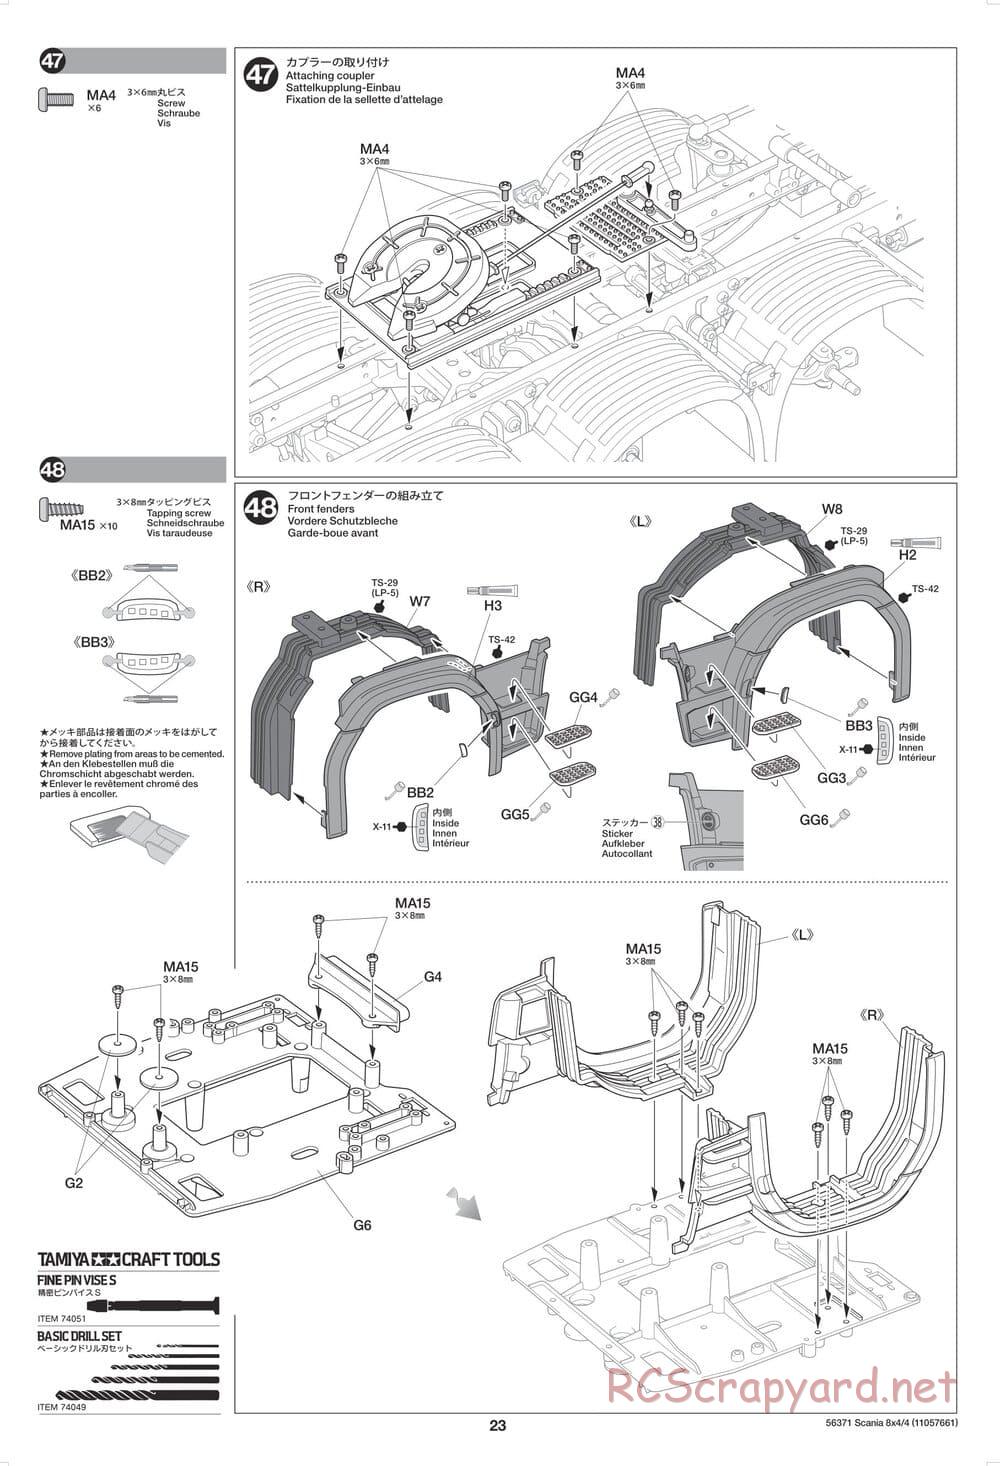 Tamiya - Scania 770 S 8x4/4 Chassis - Manual - Page 23